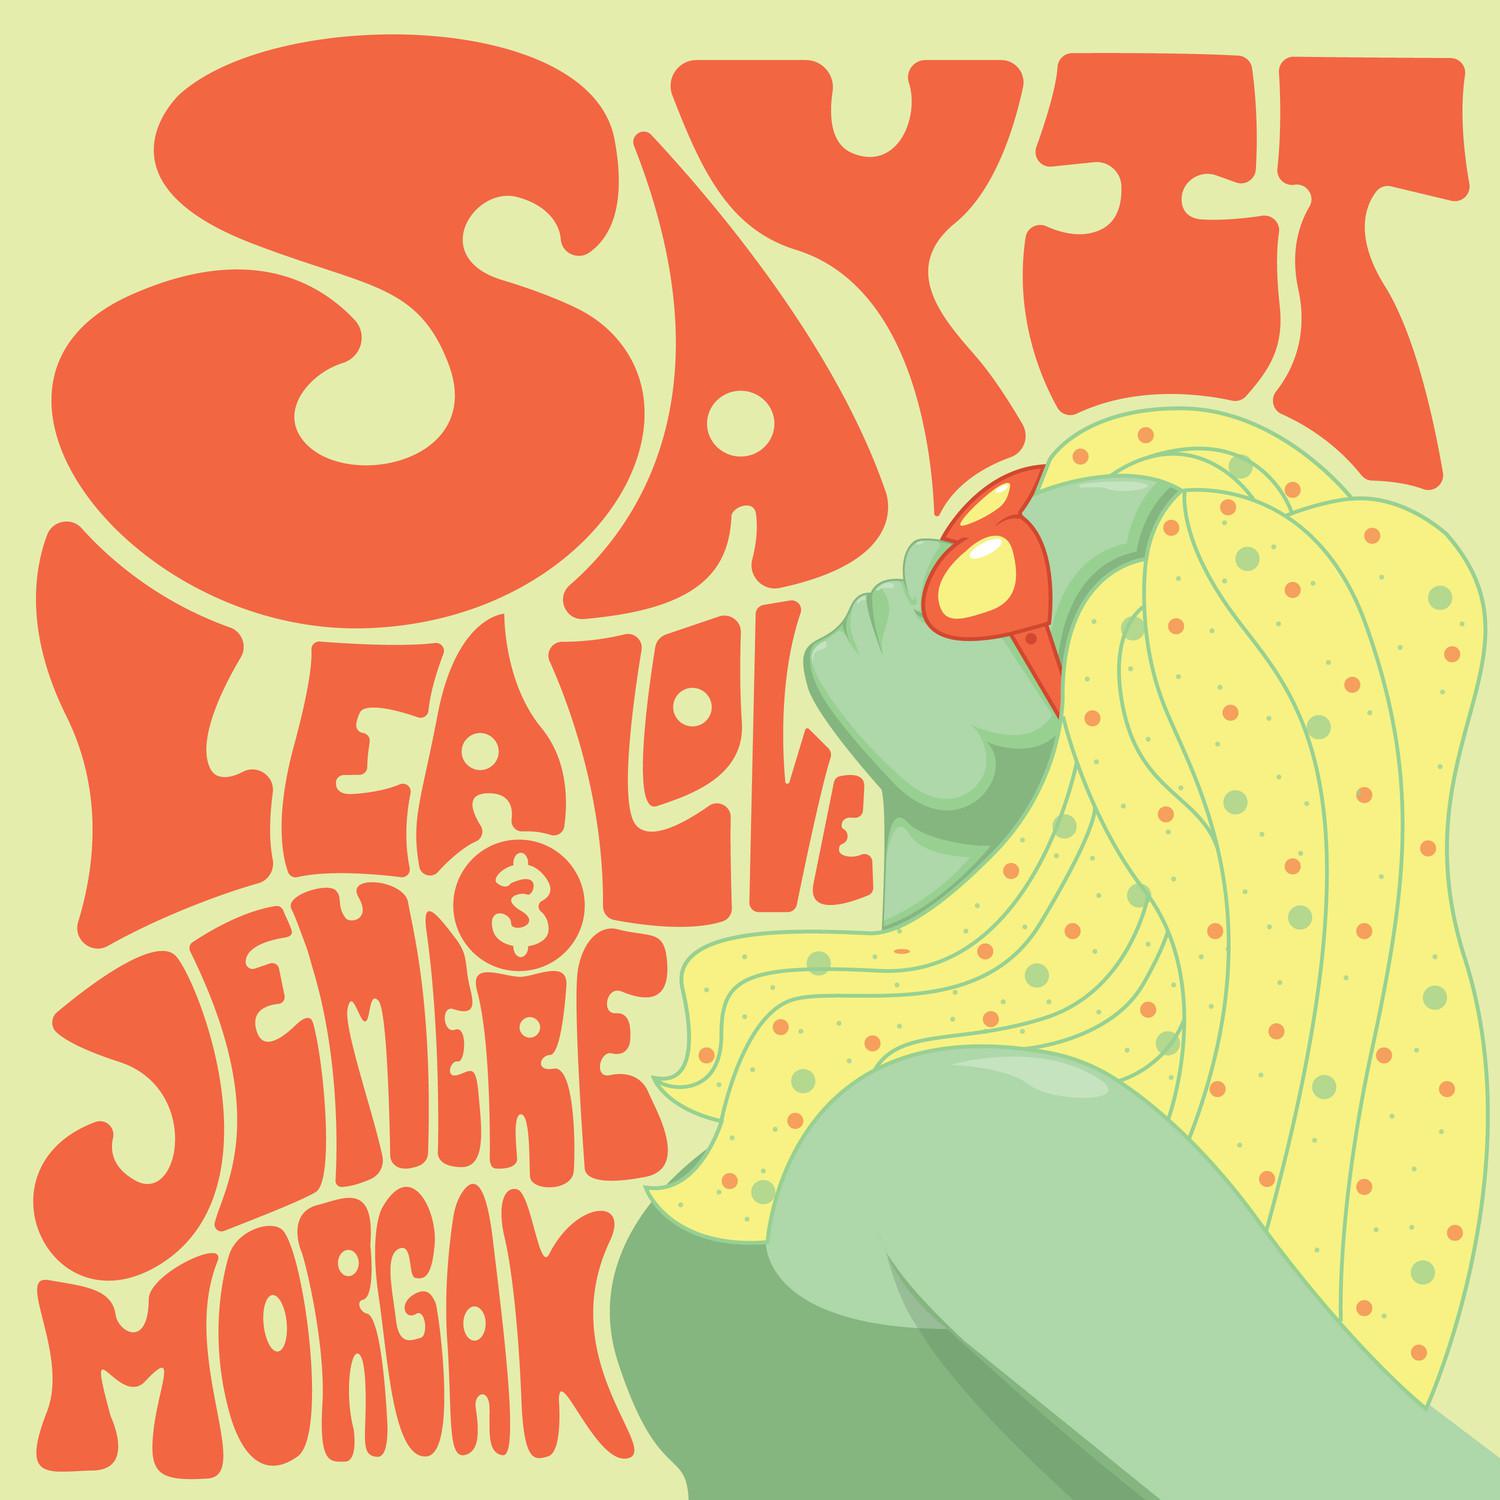 Say It feat. Jemere Morgan